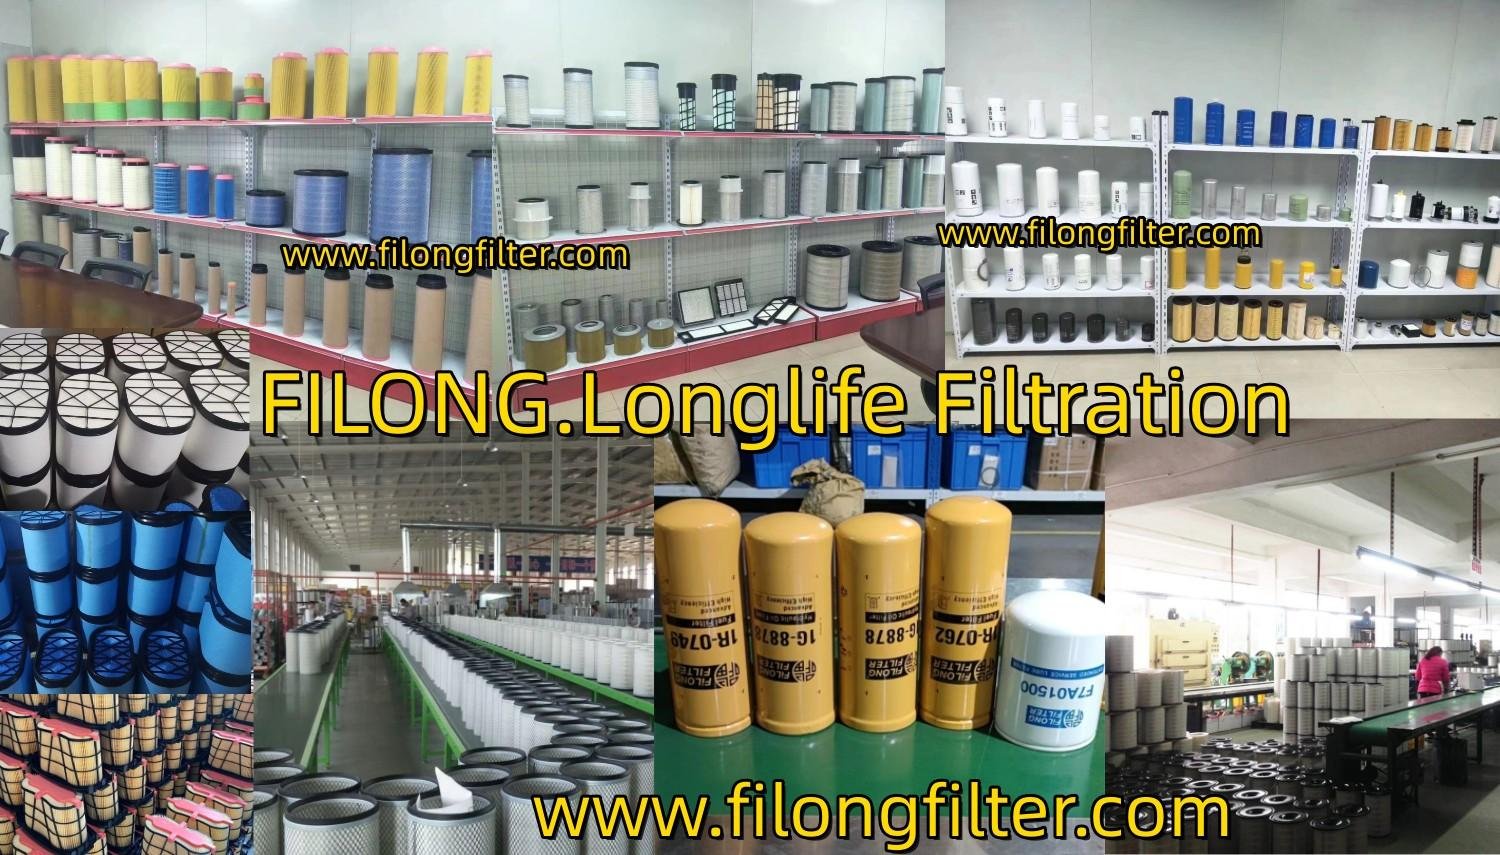 FILONG FILTER Manufacturers in china,Suppliers In China,  FACTORY In China,  AUTOMOTIVE FILTERS Manufacturers In China,AUTOMOBILE FILTERS Manufacturers In China ,Car filter  Manufacturers In China oil filter Manufacturers in china,fuel filter Manufacturers in china,Air Filter  Manufacturers in china ,cabin filter Manufacturers in china,hydraulic filter Manufacturers in china,iveco filter Manufacturers in china,volvo filter Manufacturers in china,caterpillar filter Manufacturers in china,man filter Manufacturers in china,jcb filter Manufacturers in china,john deere filter Manufacturers in china,scania filter Manufacturers in china,mercedes benz filter Manufacturers in china,daf filter Manufacturers in china,perkins filter Manufacturers in china,renault filter Manufacturers in china,hitachi filter Manufacturers in china,deutz filter Manufacturers in china,cummins filter Manufacturers in china,howo filter Manufacturers in china,weichai filter Manufacturers in china,thermo king filter Manufacturers in china,komatsu filter Manufacturers in china, FILONG FILTER FACTORY, Baldwin/Fleetguard/Donaldson/Mann/Hengst,High quality and Good price from China-GREATMAN FILTER,AIR FILTER,OIL FILTER,FUEL FILTER,CABIN FILTER,REPLACE OF FLEETGUARD FILTER,MANN FILTER,BLADWIN FILTER,HENGST FILTER,VOLKSWAGEN,SKODA,AUDI, MERCEDES Benz, BMW,CITROEN ,PEUGEOT , FORD, FIAT-LADA,  RENAULT & DACIA , TOYOTA,  NISSIN & SUBARU, MAZDA, MITSUBISHI, HYUNDAI & KIA  , HONDA,LANDROVER,OPEL&BUICK&CHEVROLET,  DODGE-CHRYSLER,ISUZU, SUZUKI,SSANGYONG,  MAN, DAF,KOMATSU,HINO,DEUTZ IVECO,VOLVO,SCANIA,JCB,JOHN DEERE,CATERPILLAR,NEW HOLLAND,HITACHI,DOOSAN DAEWOO,CUMMINS